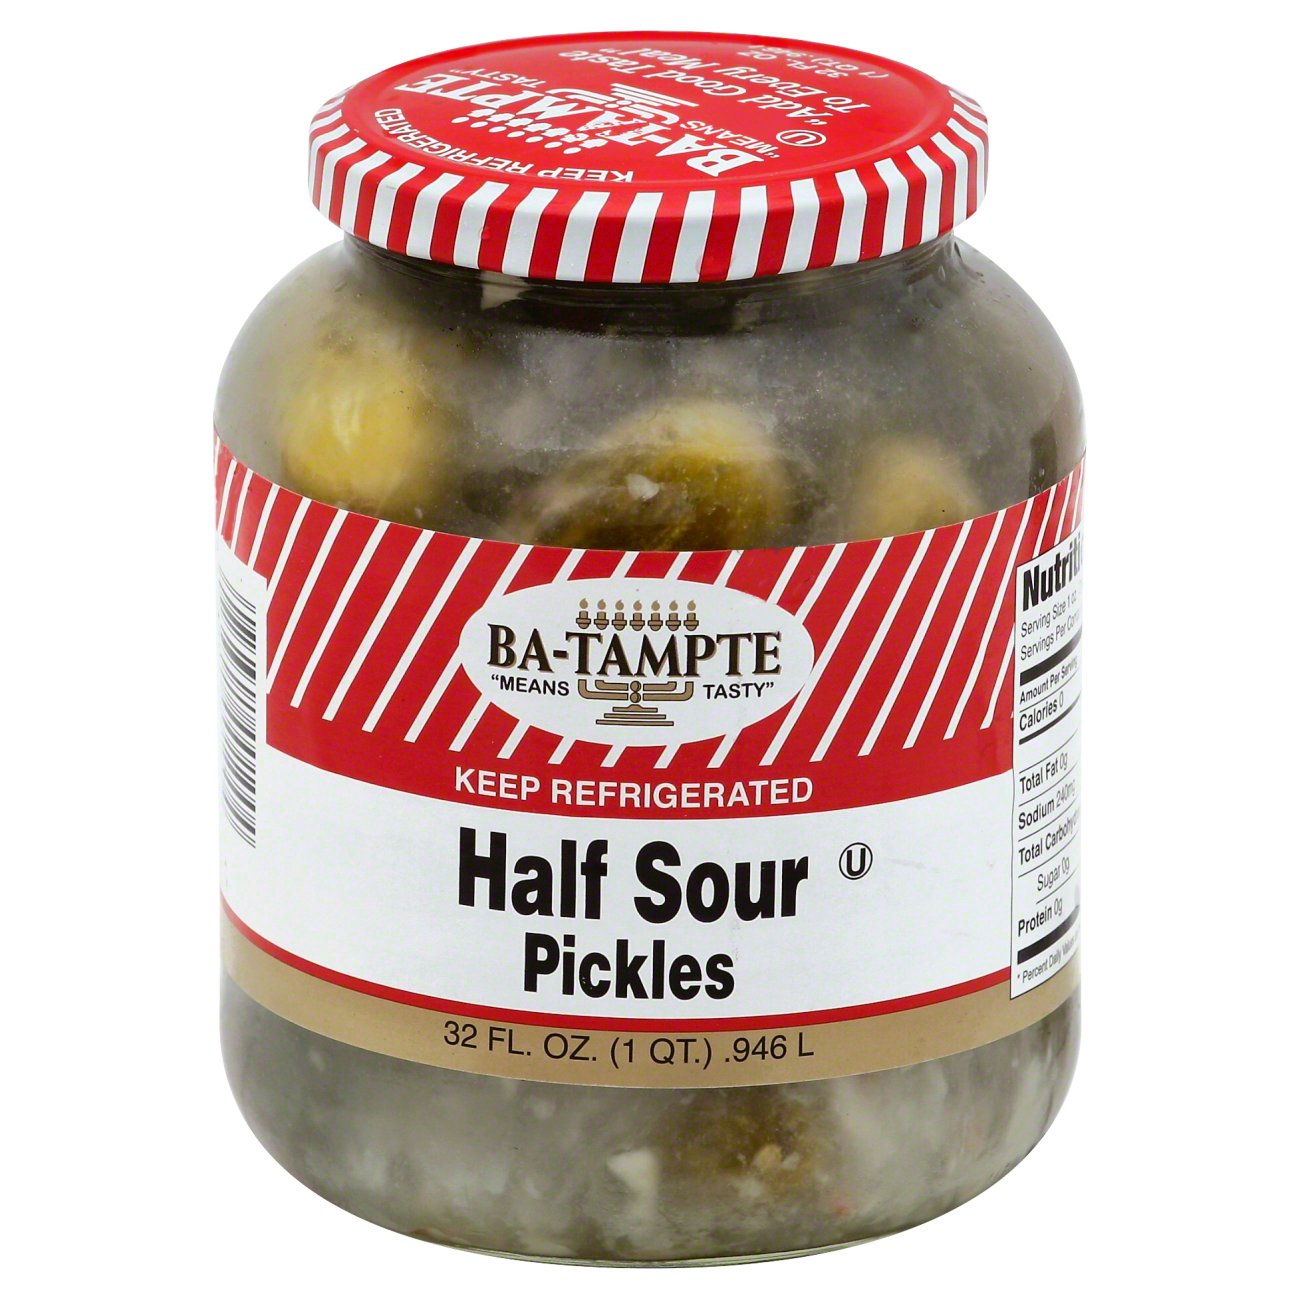 Batampte Kosher Half Sour Pickles - Shop Canned & Dried Food at H-E-B.